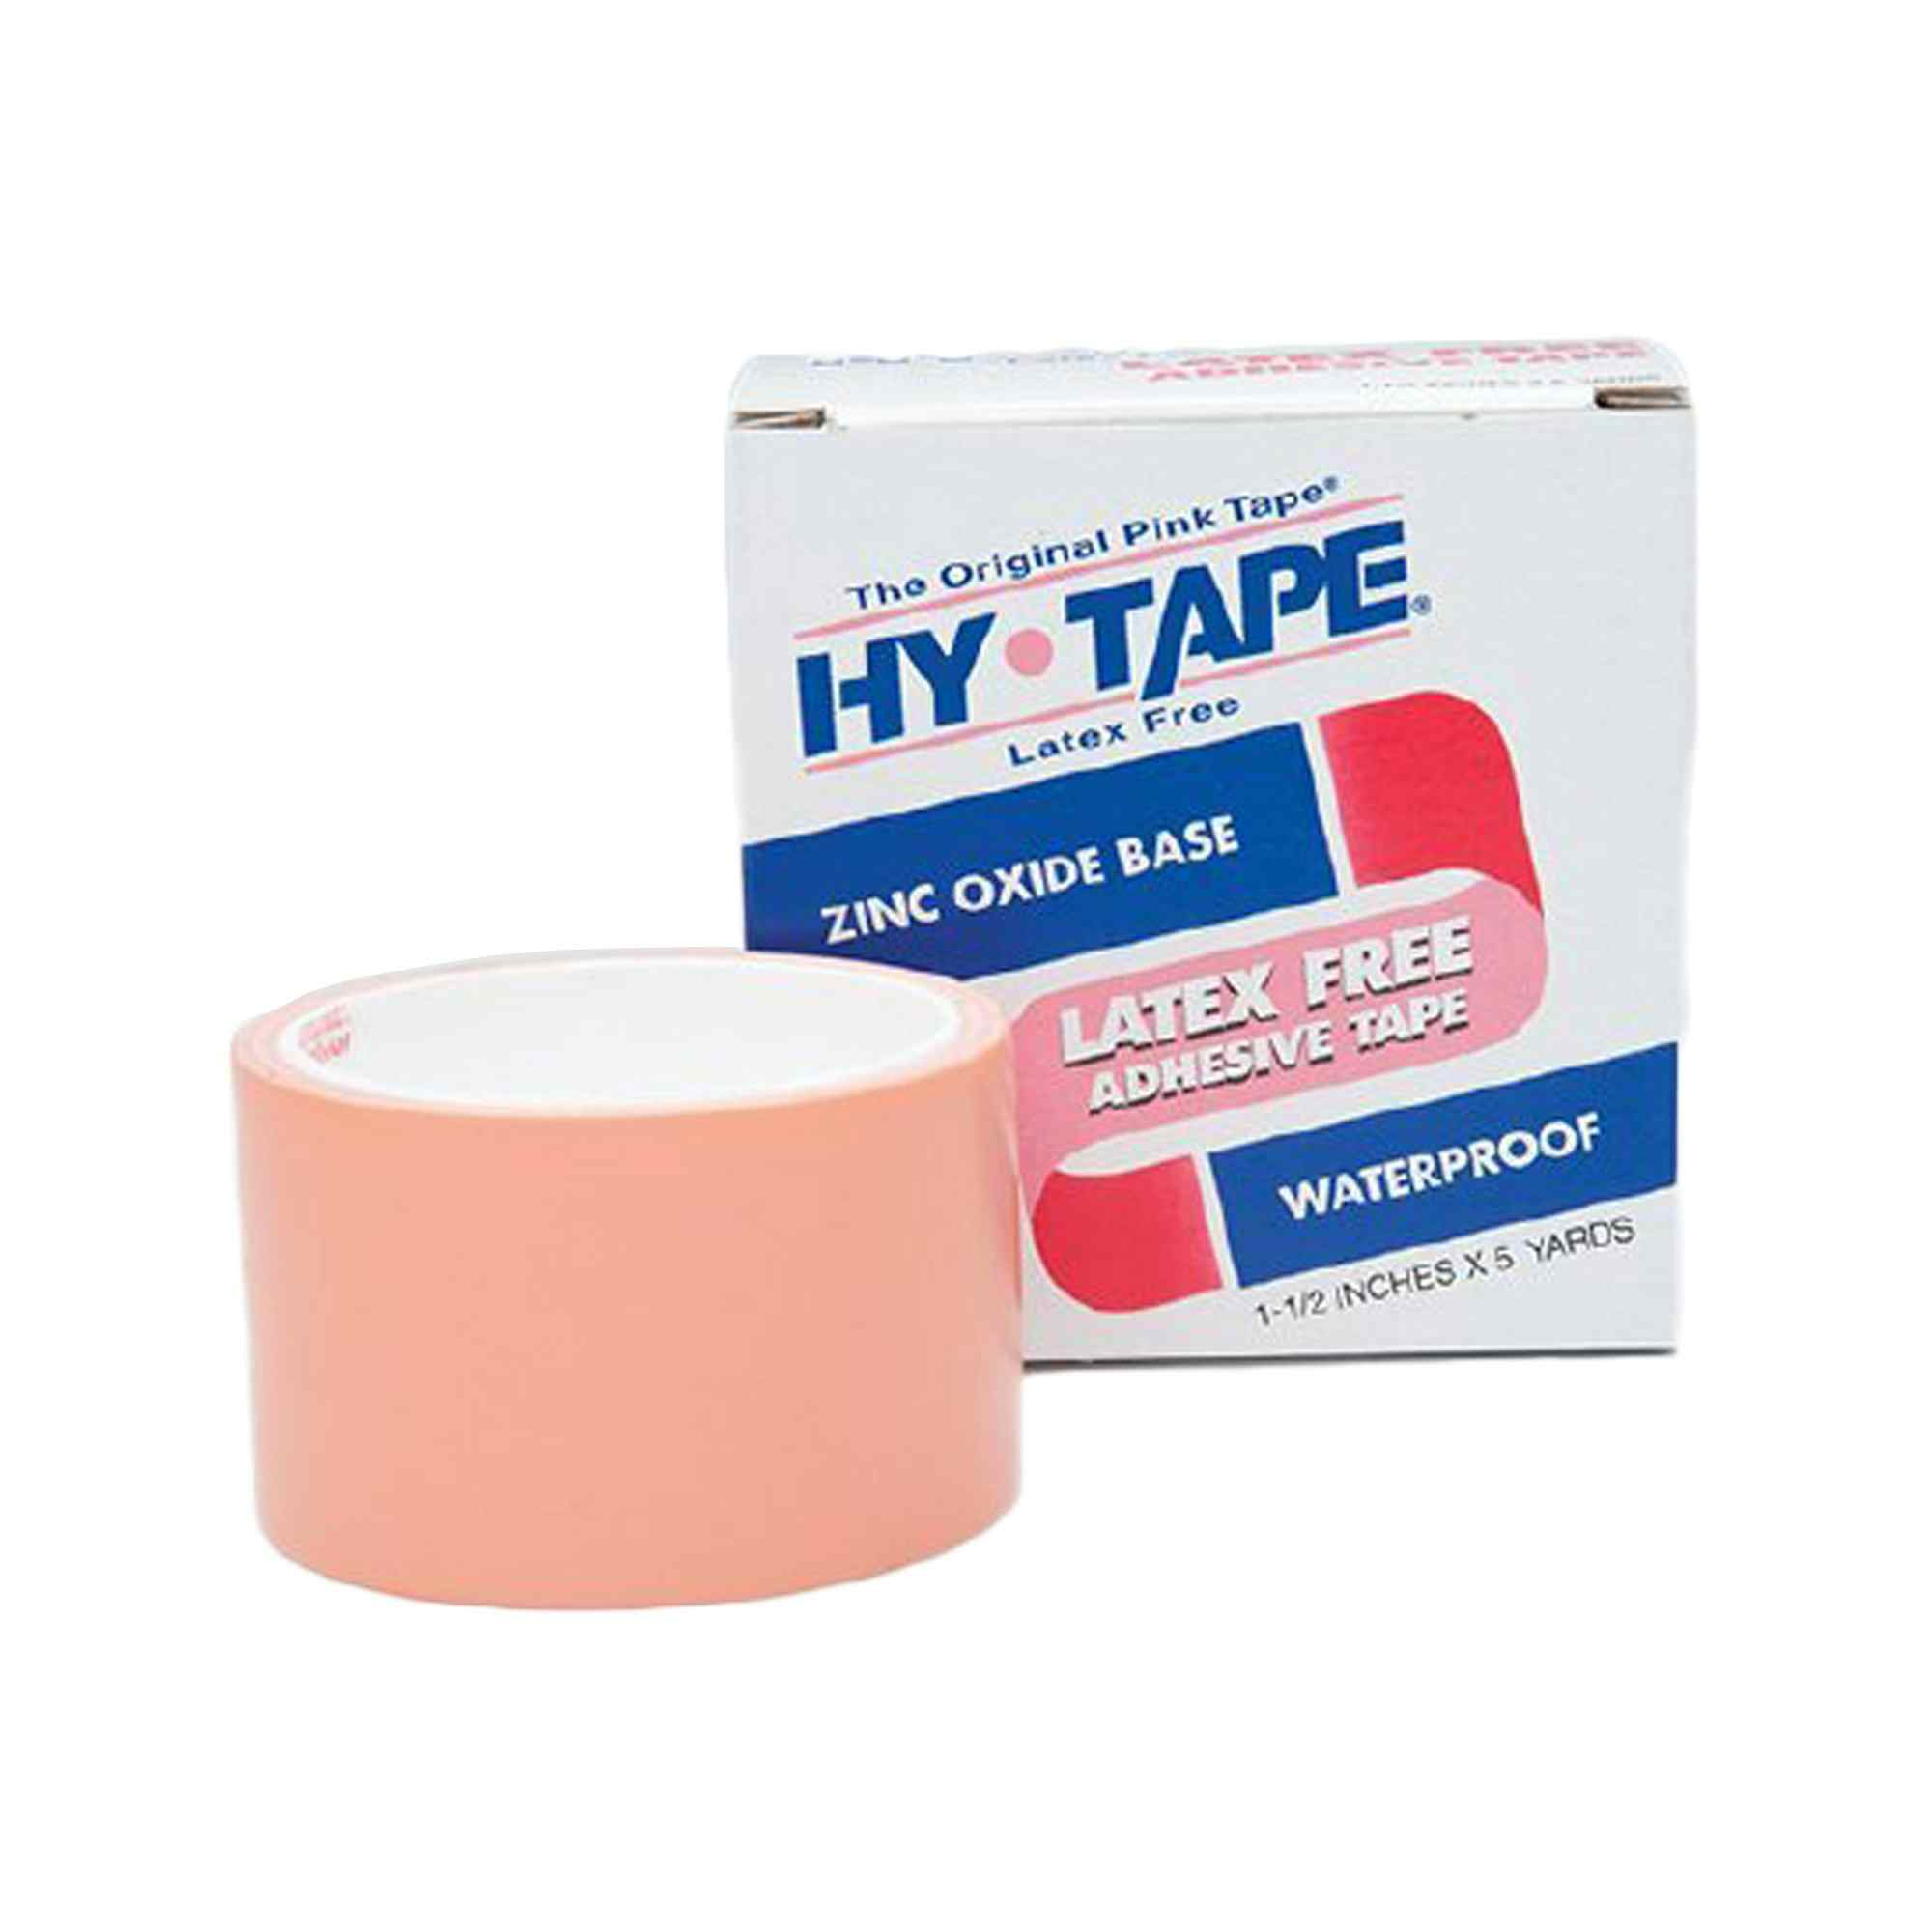 Hy-Tape Latex Free Zinc Oxide-Base Adhesive Tape, Waterproof, 1.5" X 5 yds, 115BLF, 1 Roll